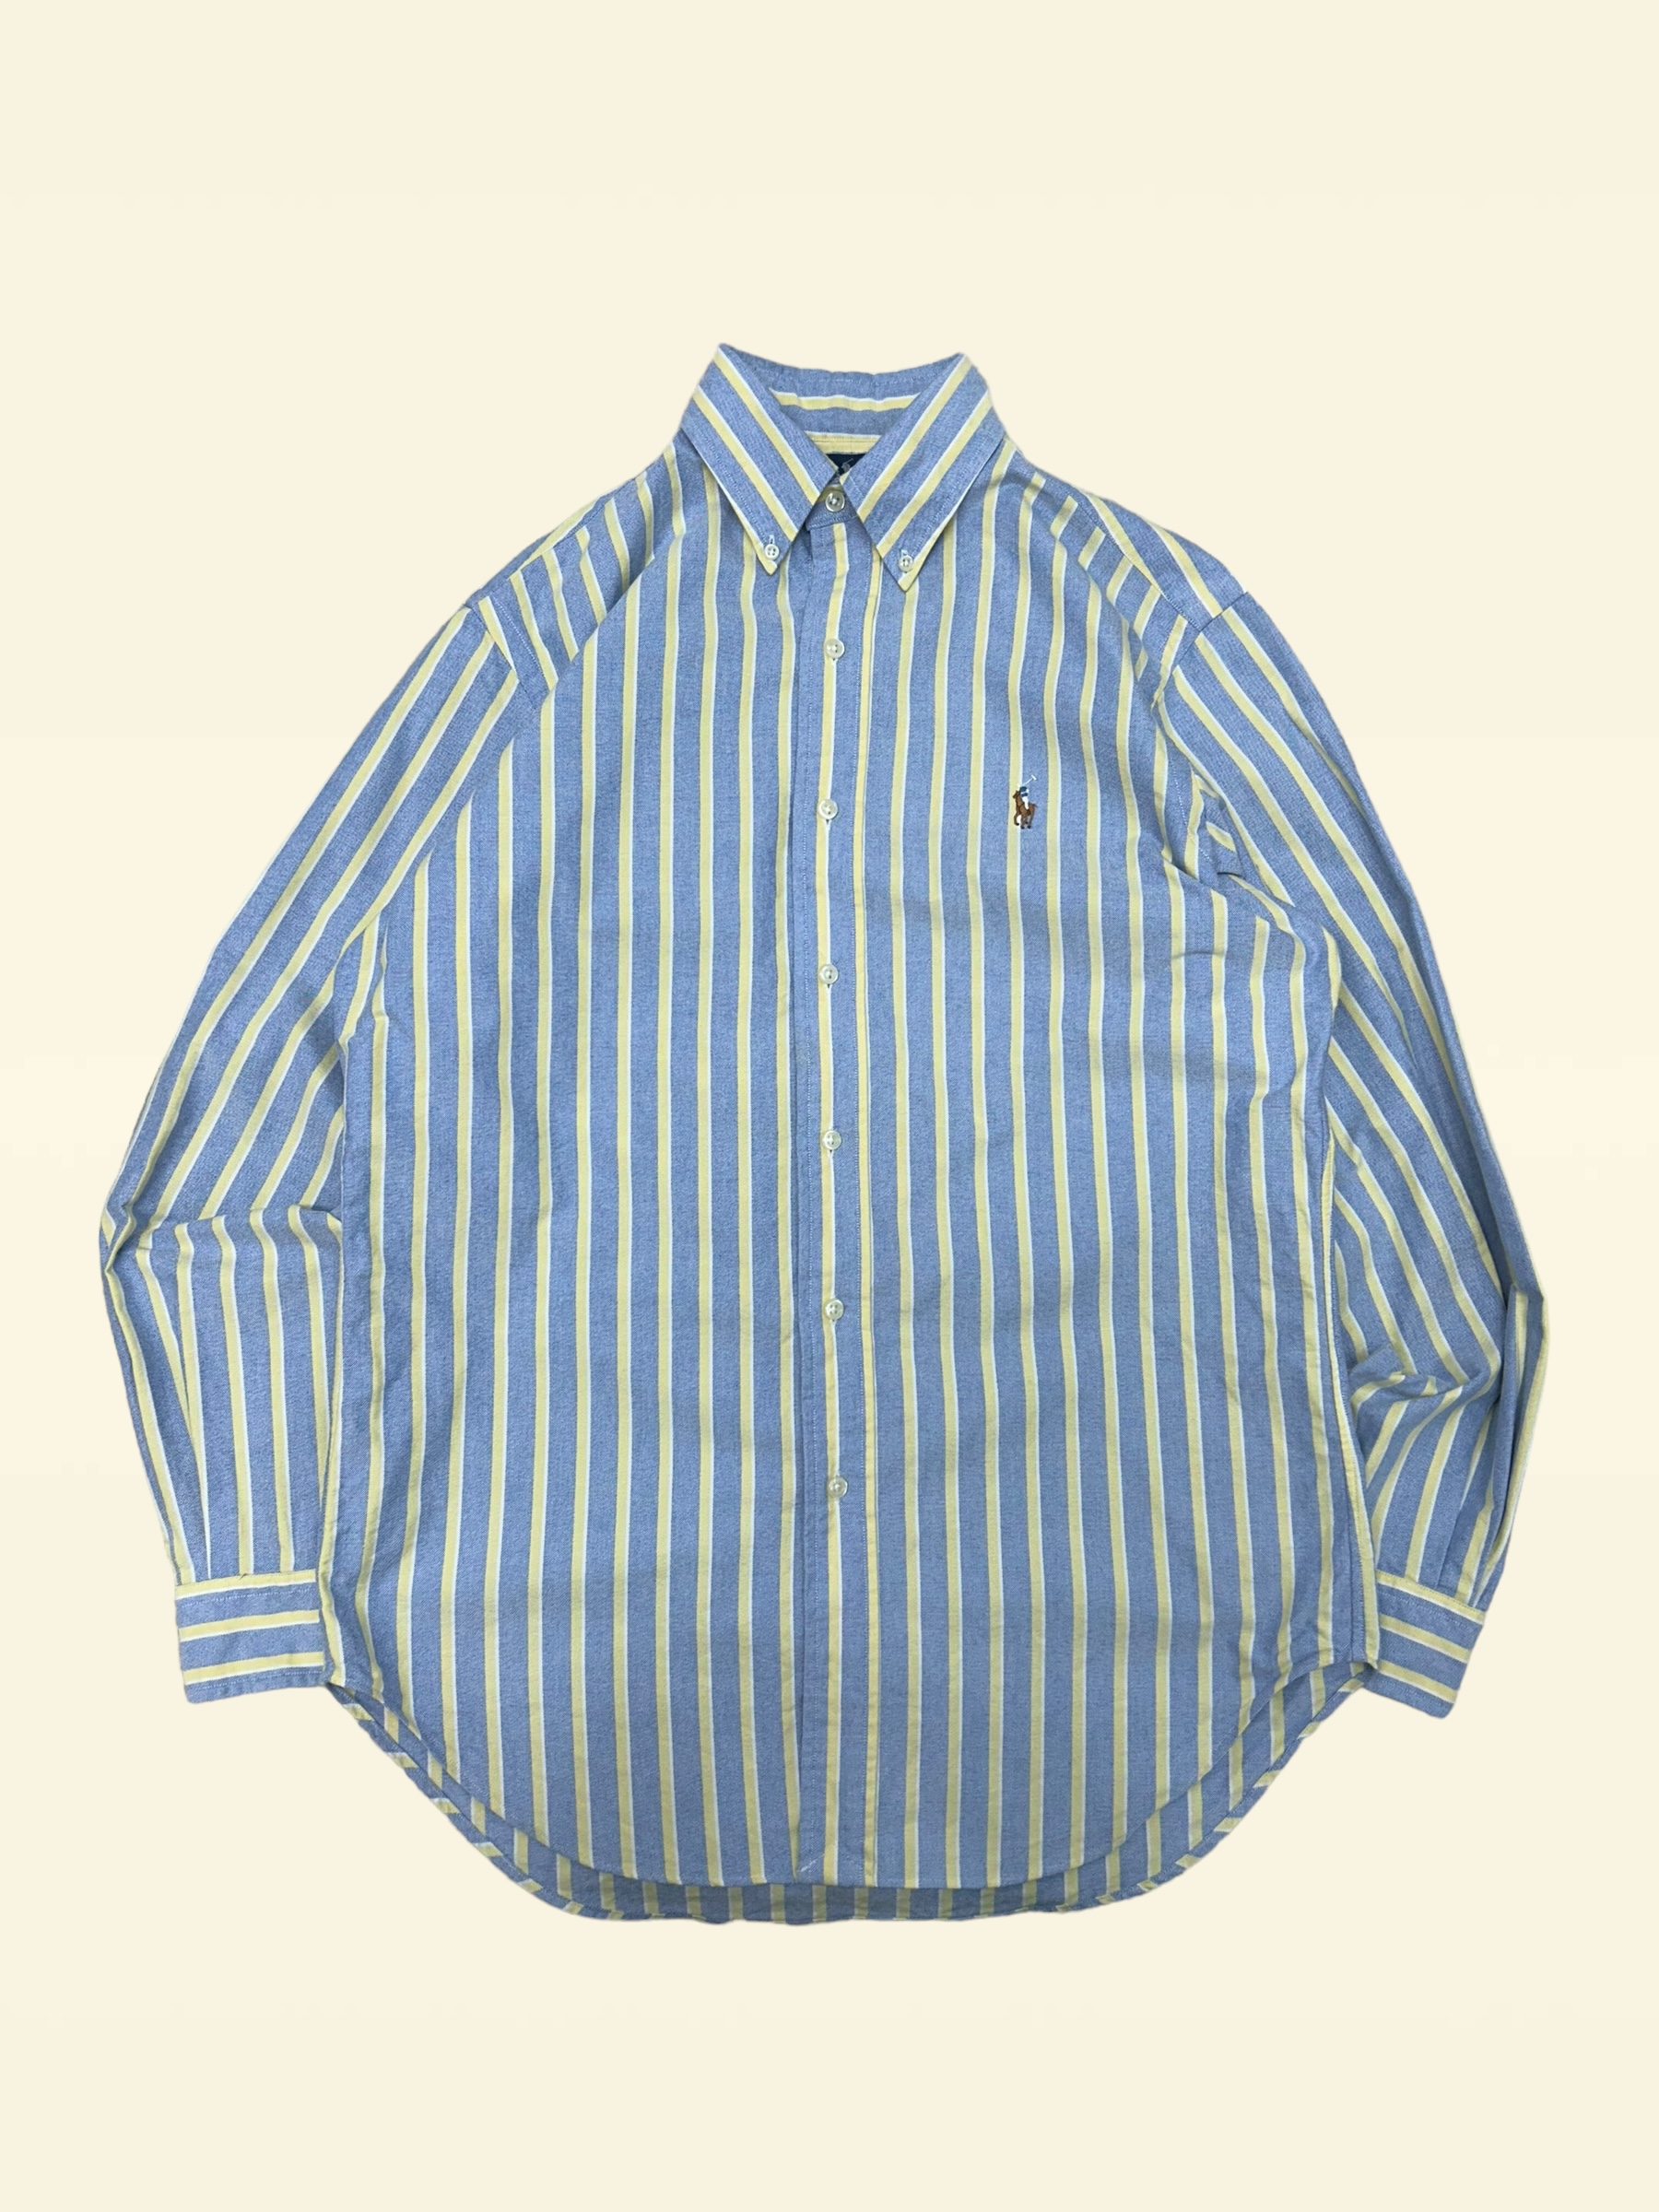 (From USA)Polo ralph lauren yellow/blue stripe oxford shirt 15